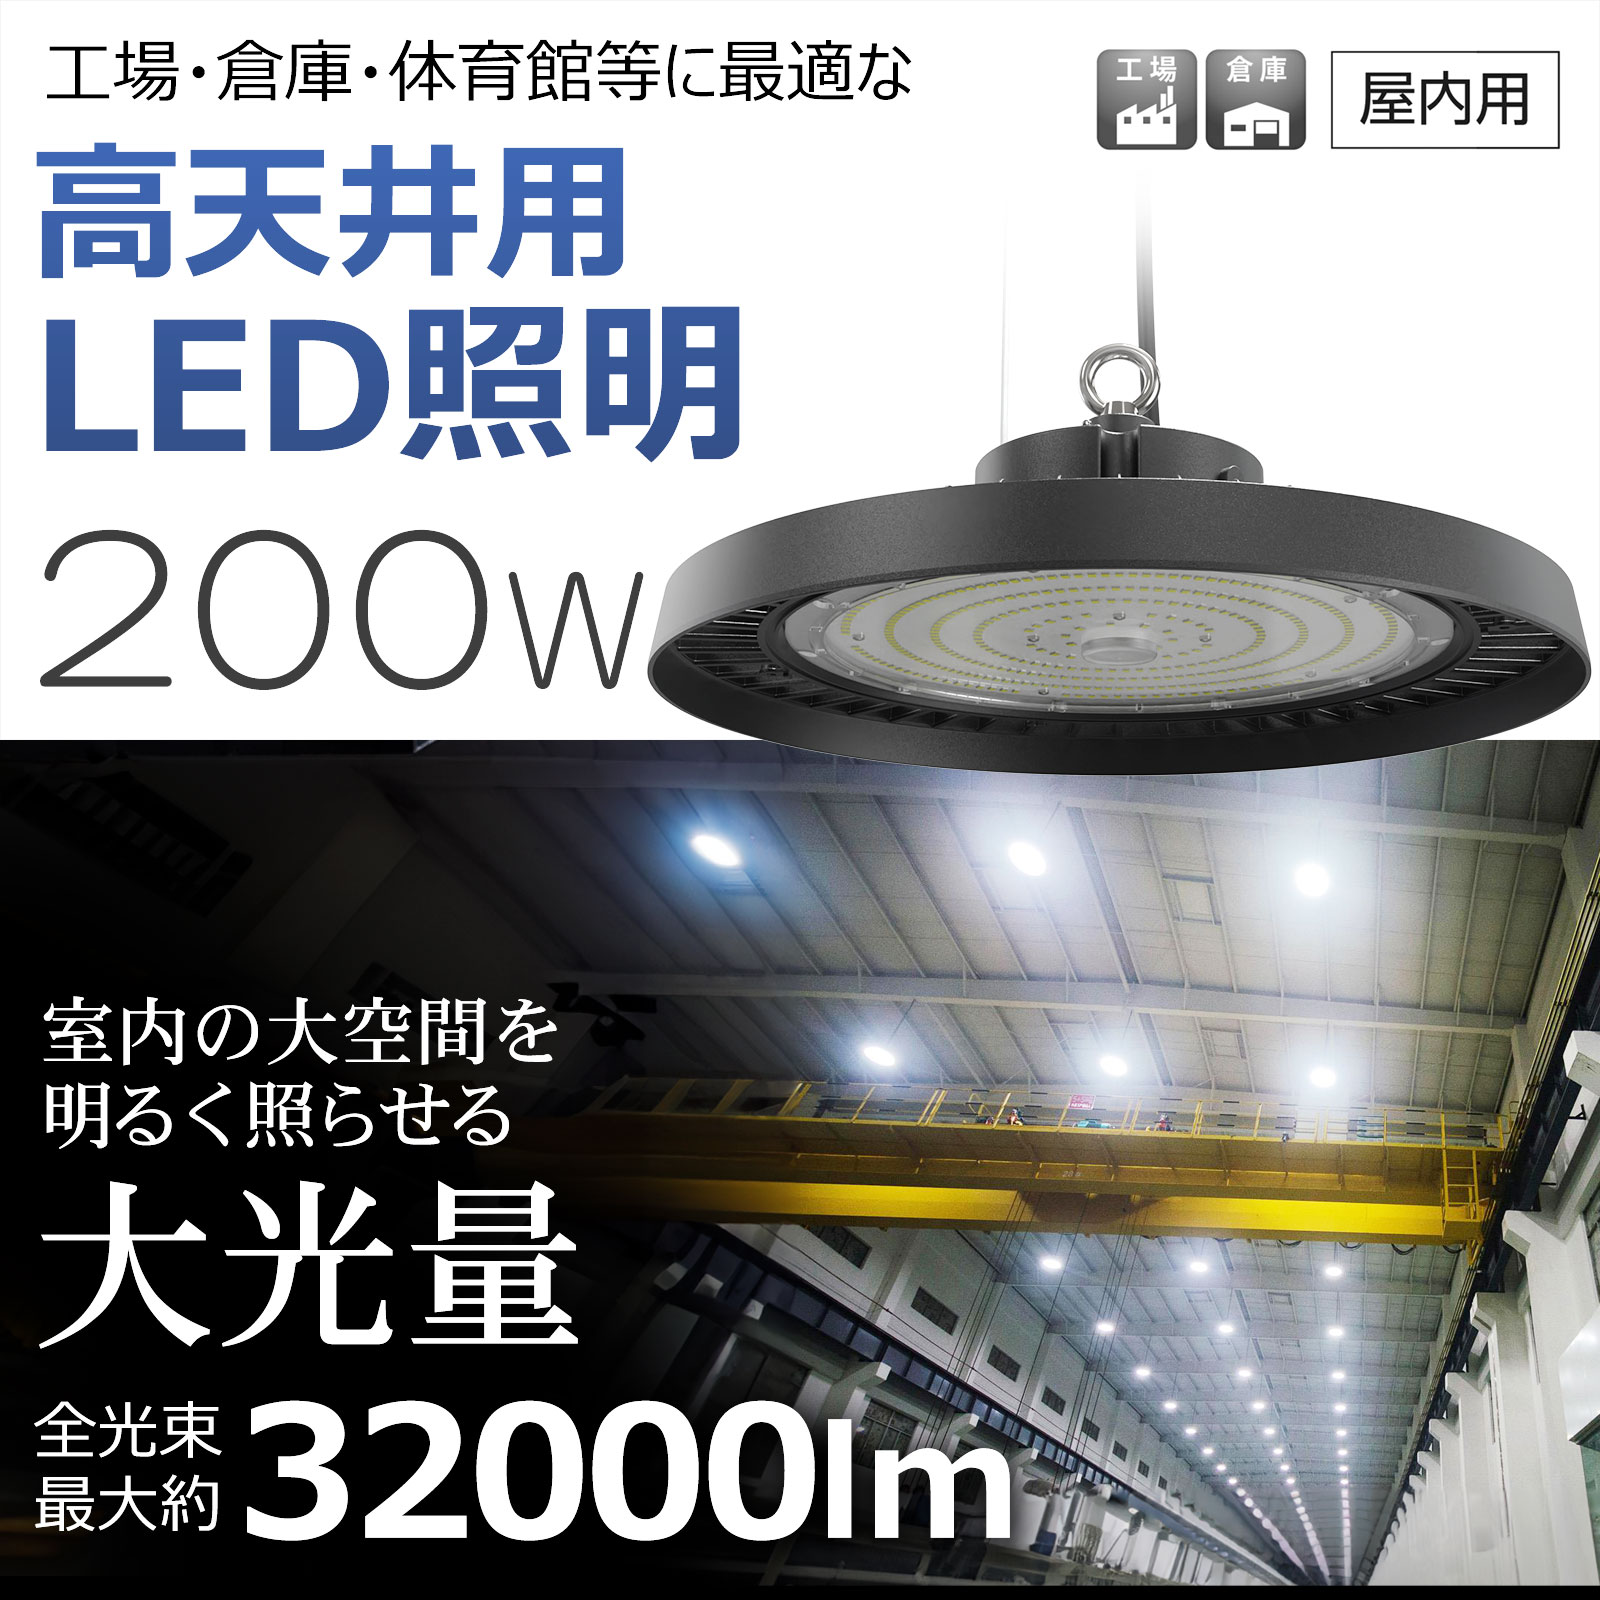 SALE LED高天井用投光器 200W 32000lm 高天井灯 LEDライト 落下防止